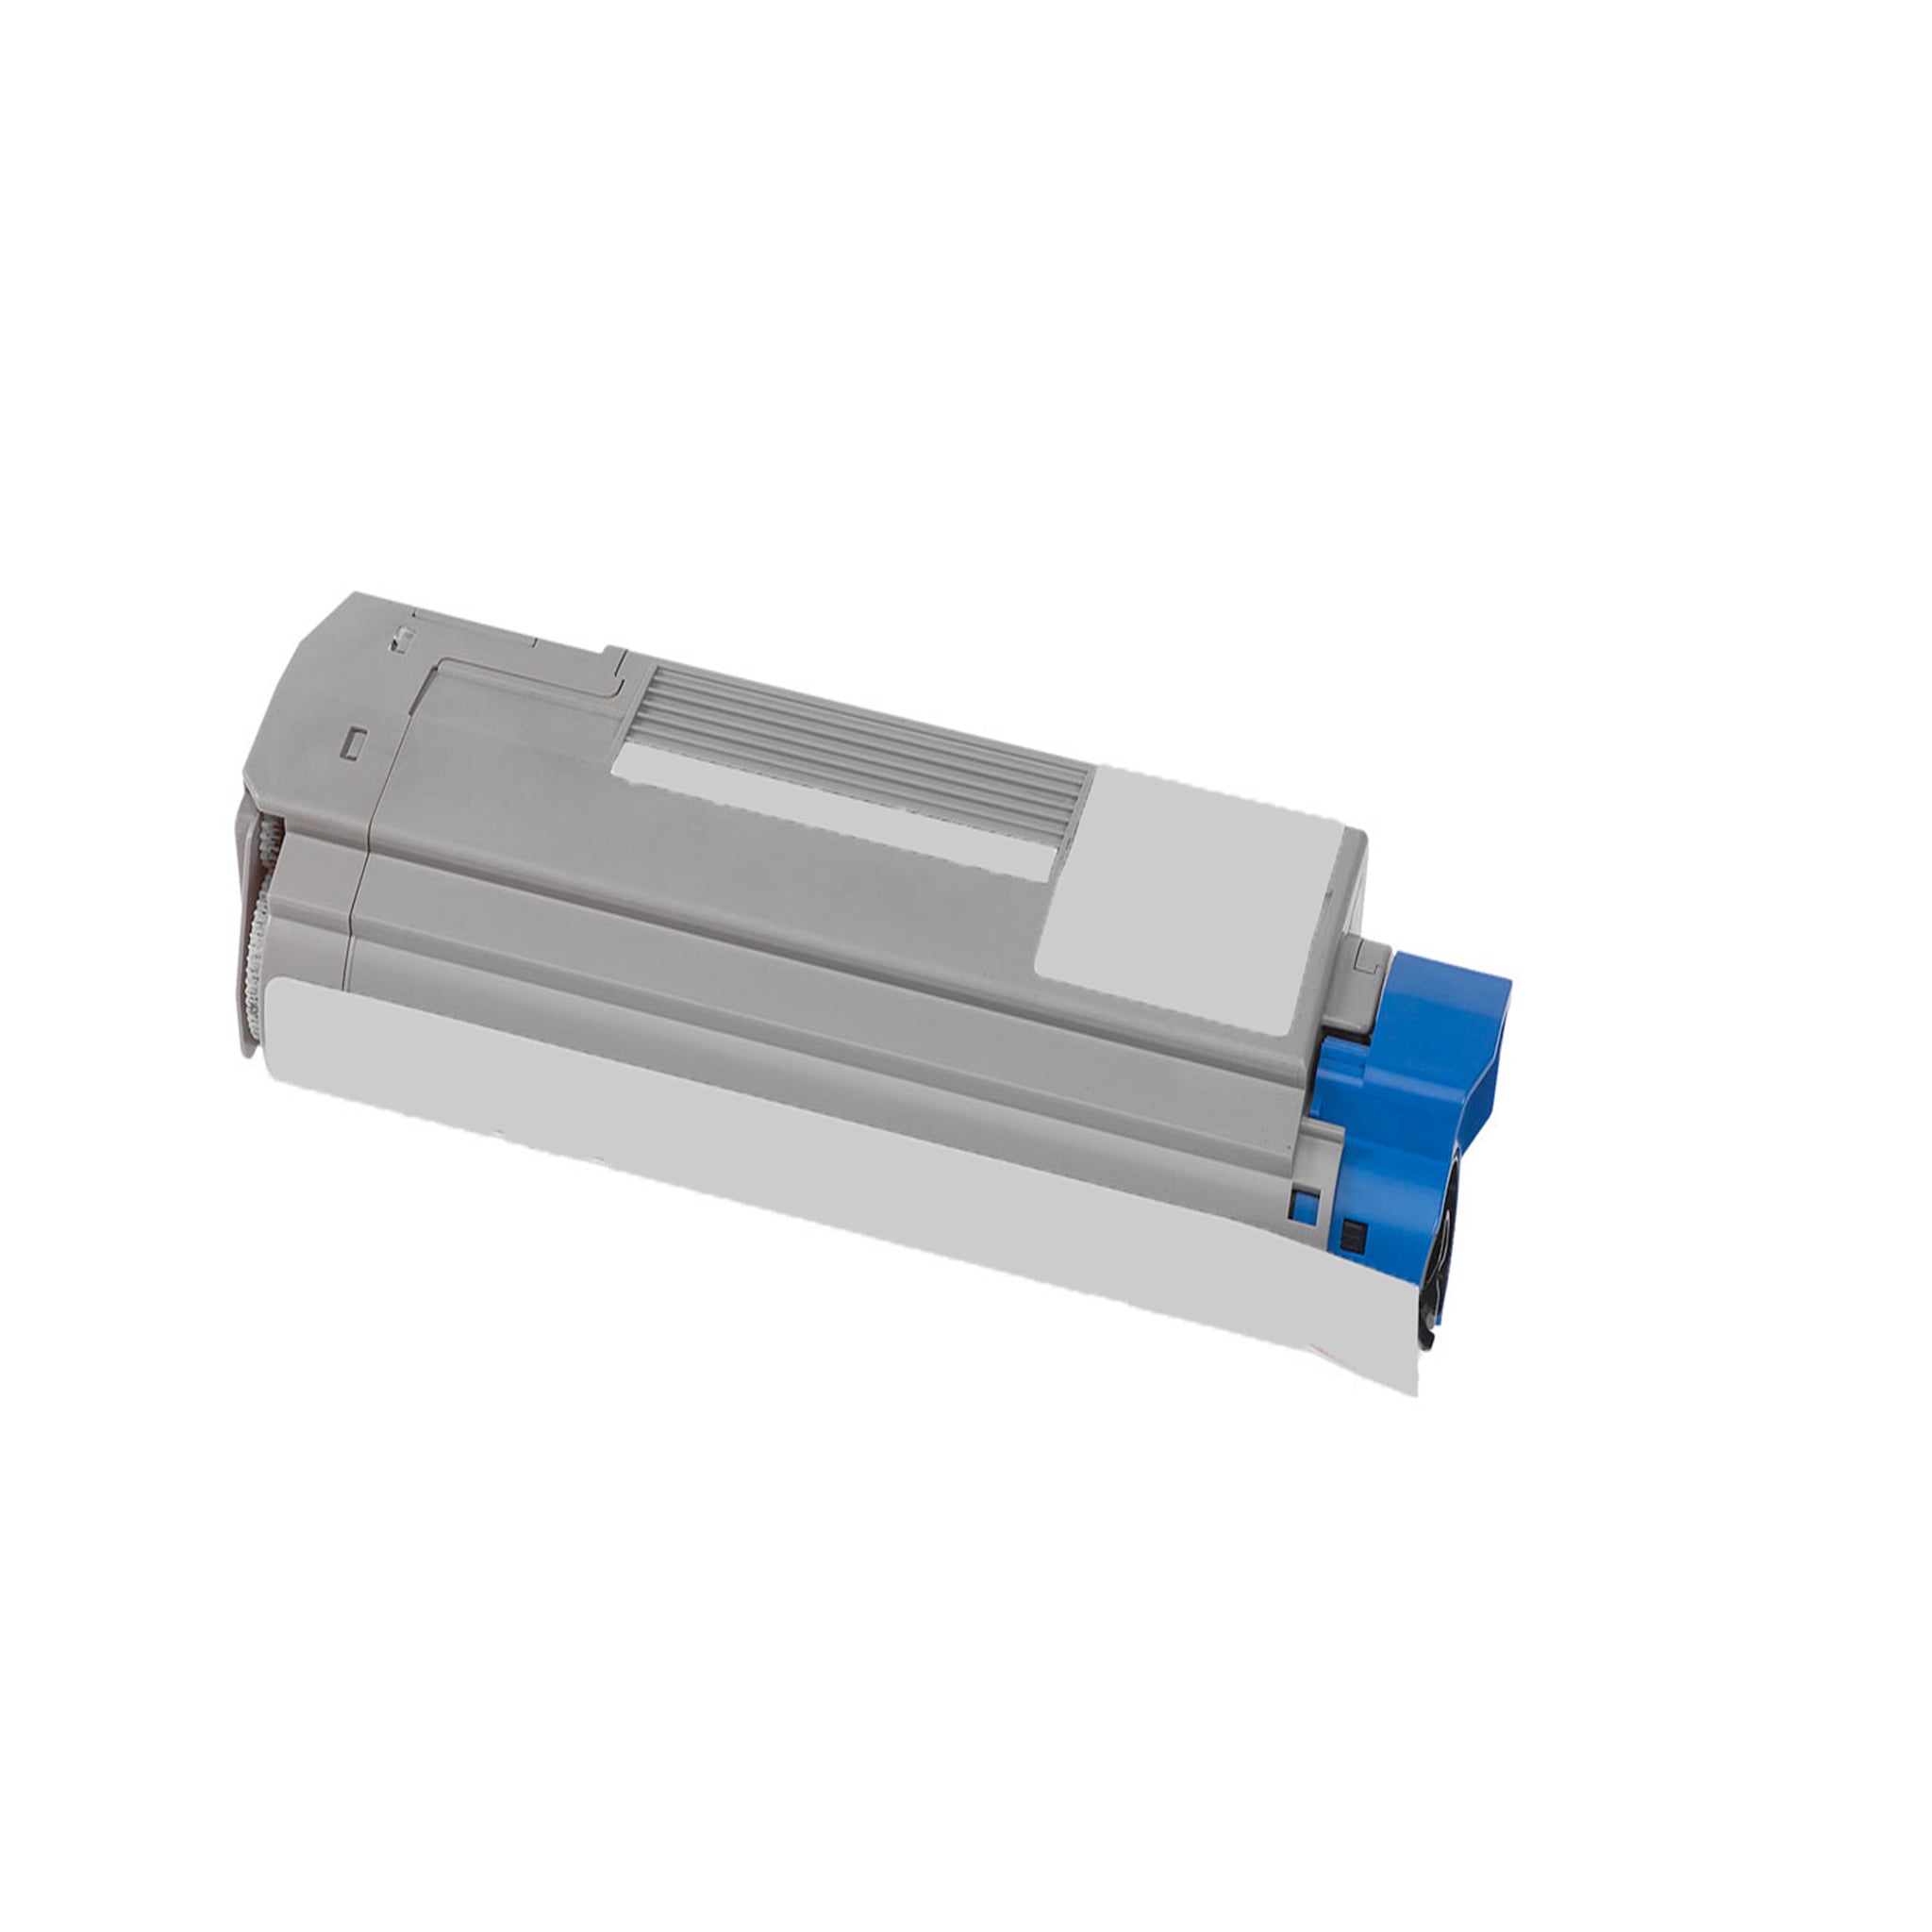 Toner cartridge compatible with OKI C5650/5750